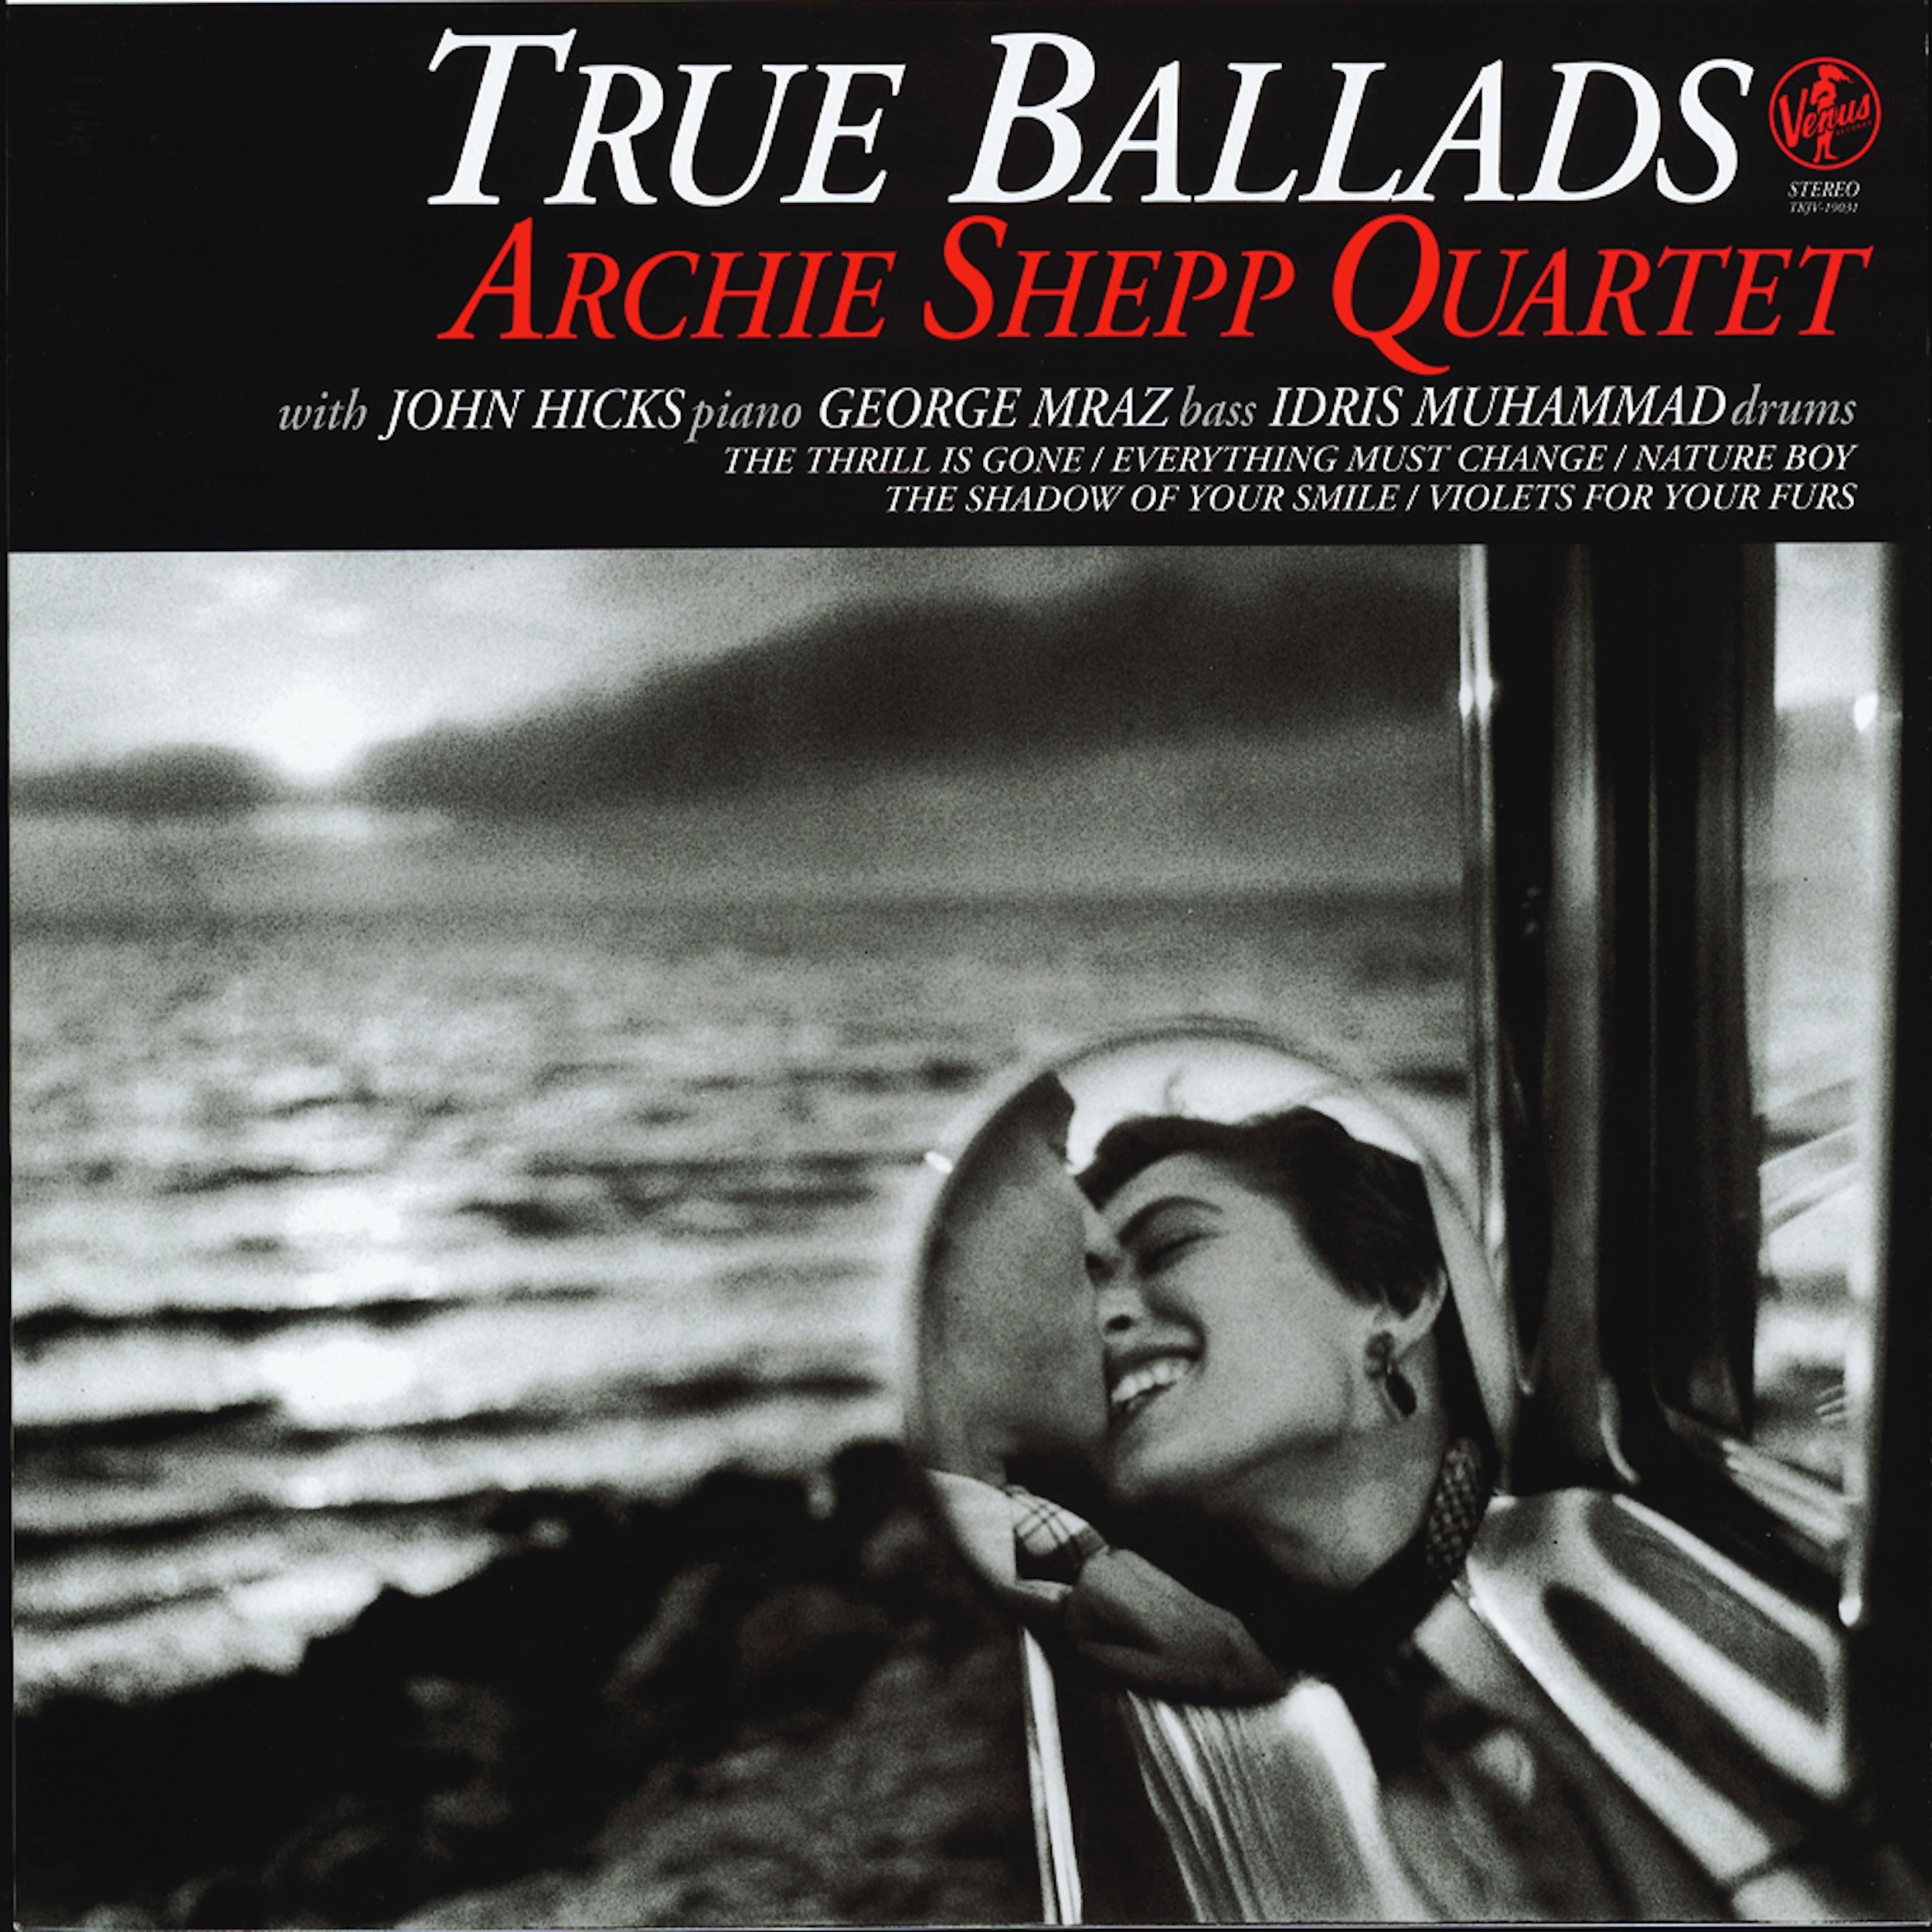 Archie Shepp Quartet – True Ballads (WAV)